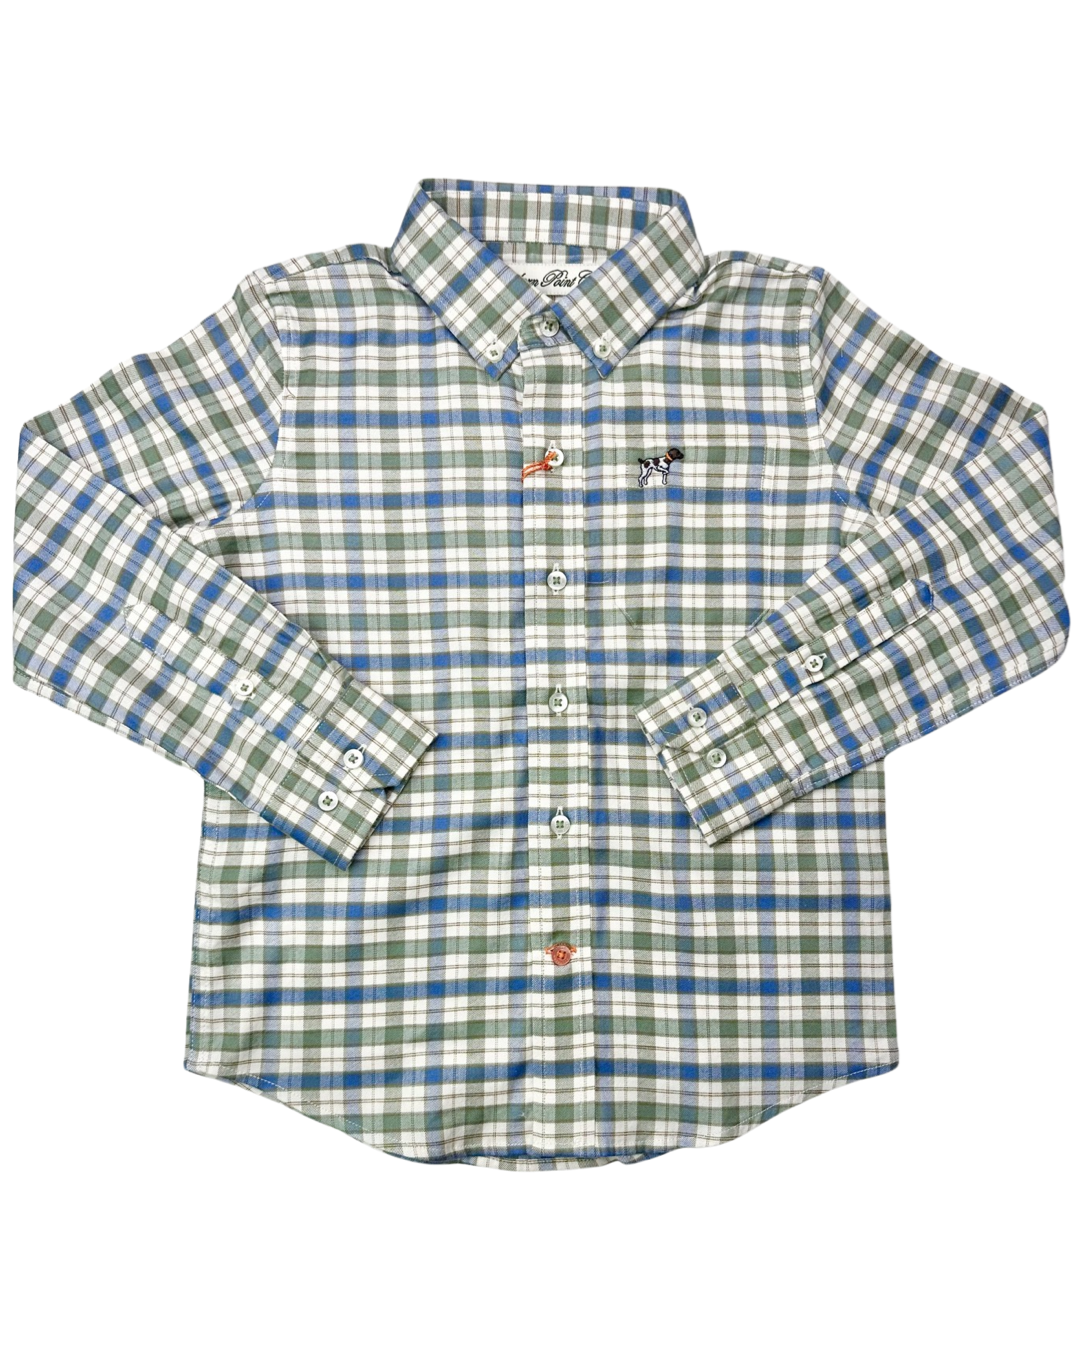 Hadley Performance Flannel Shirt - Wright Plaid (S,M,L)